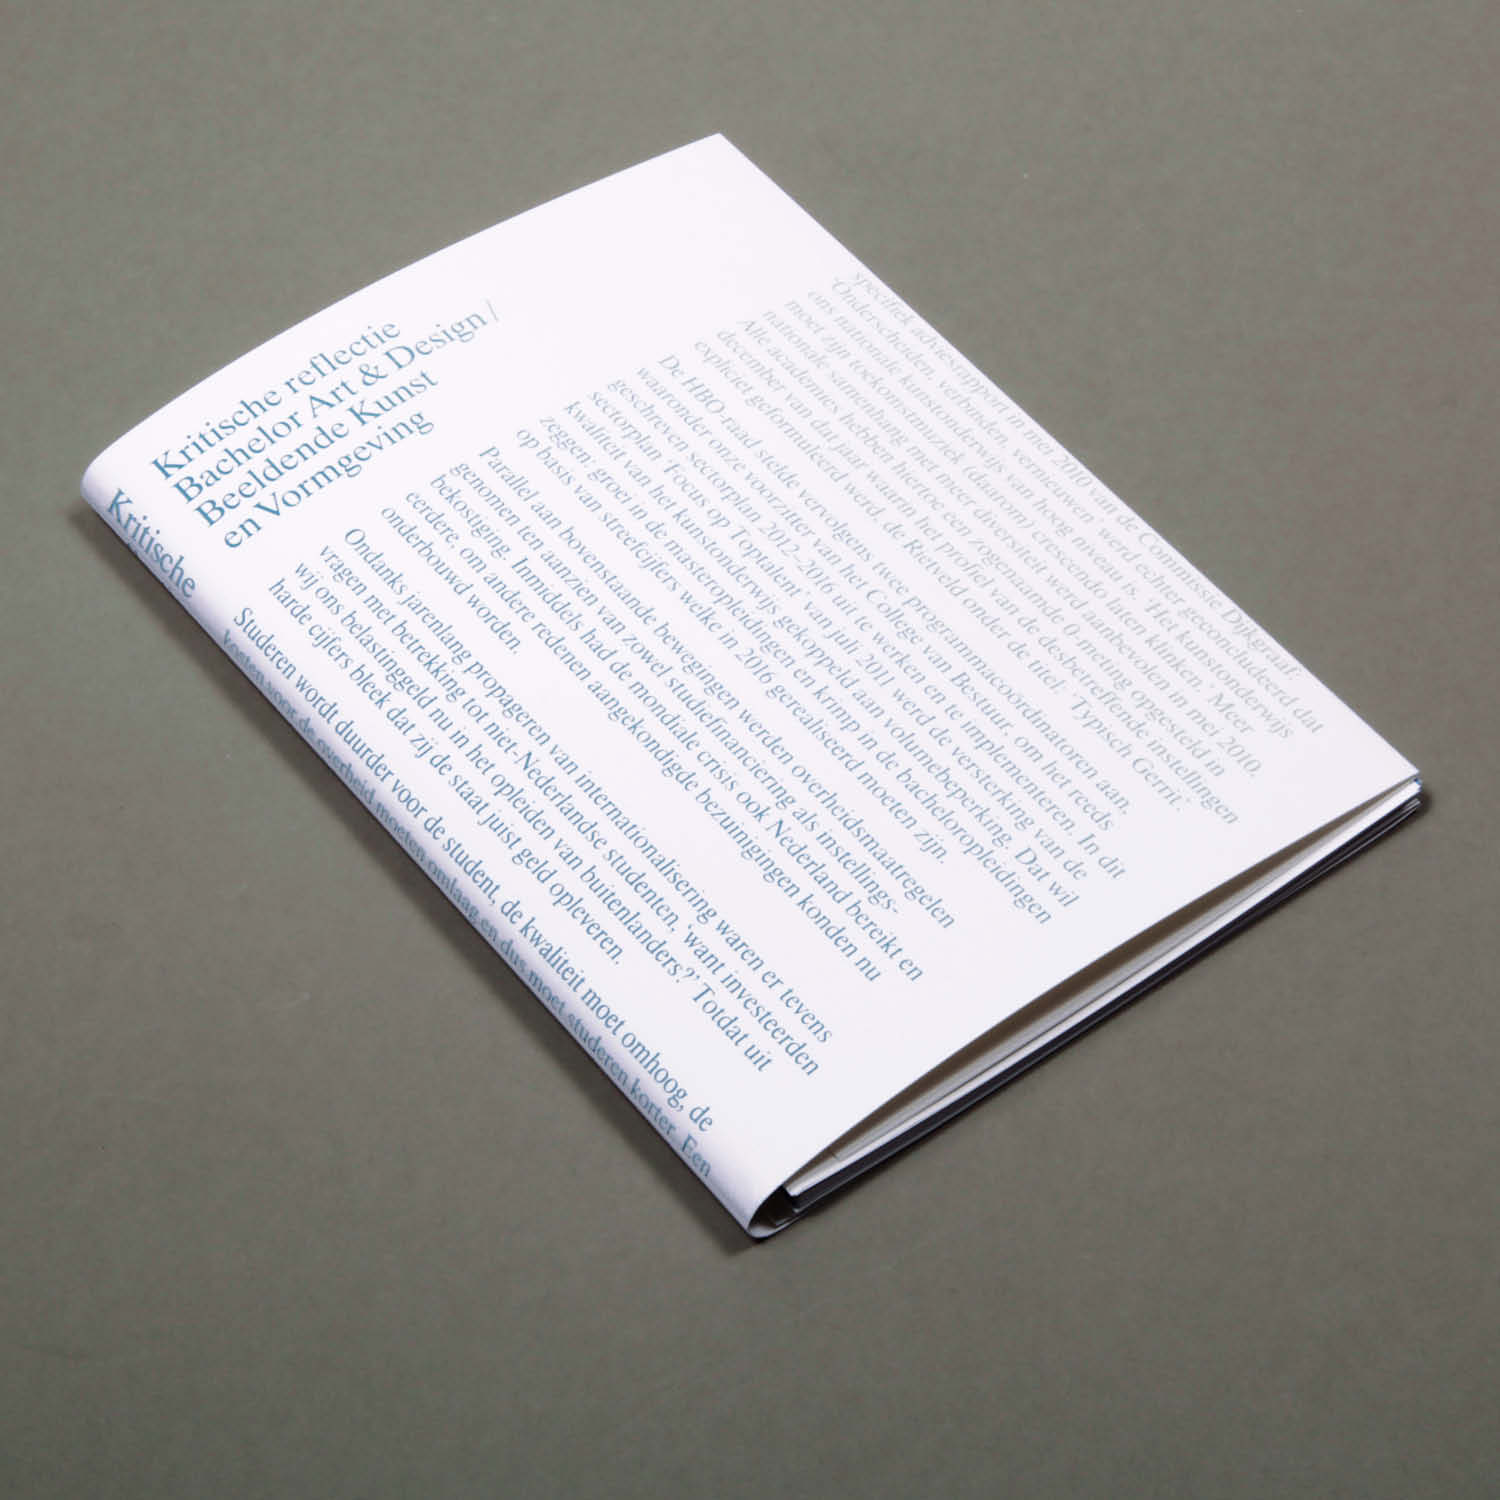 Kritishe Reflectie, Gerrit Rietveld Academie administrative report